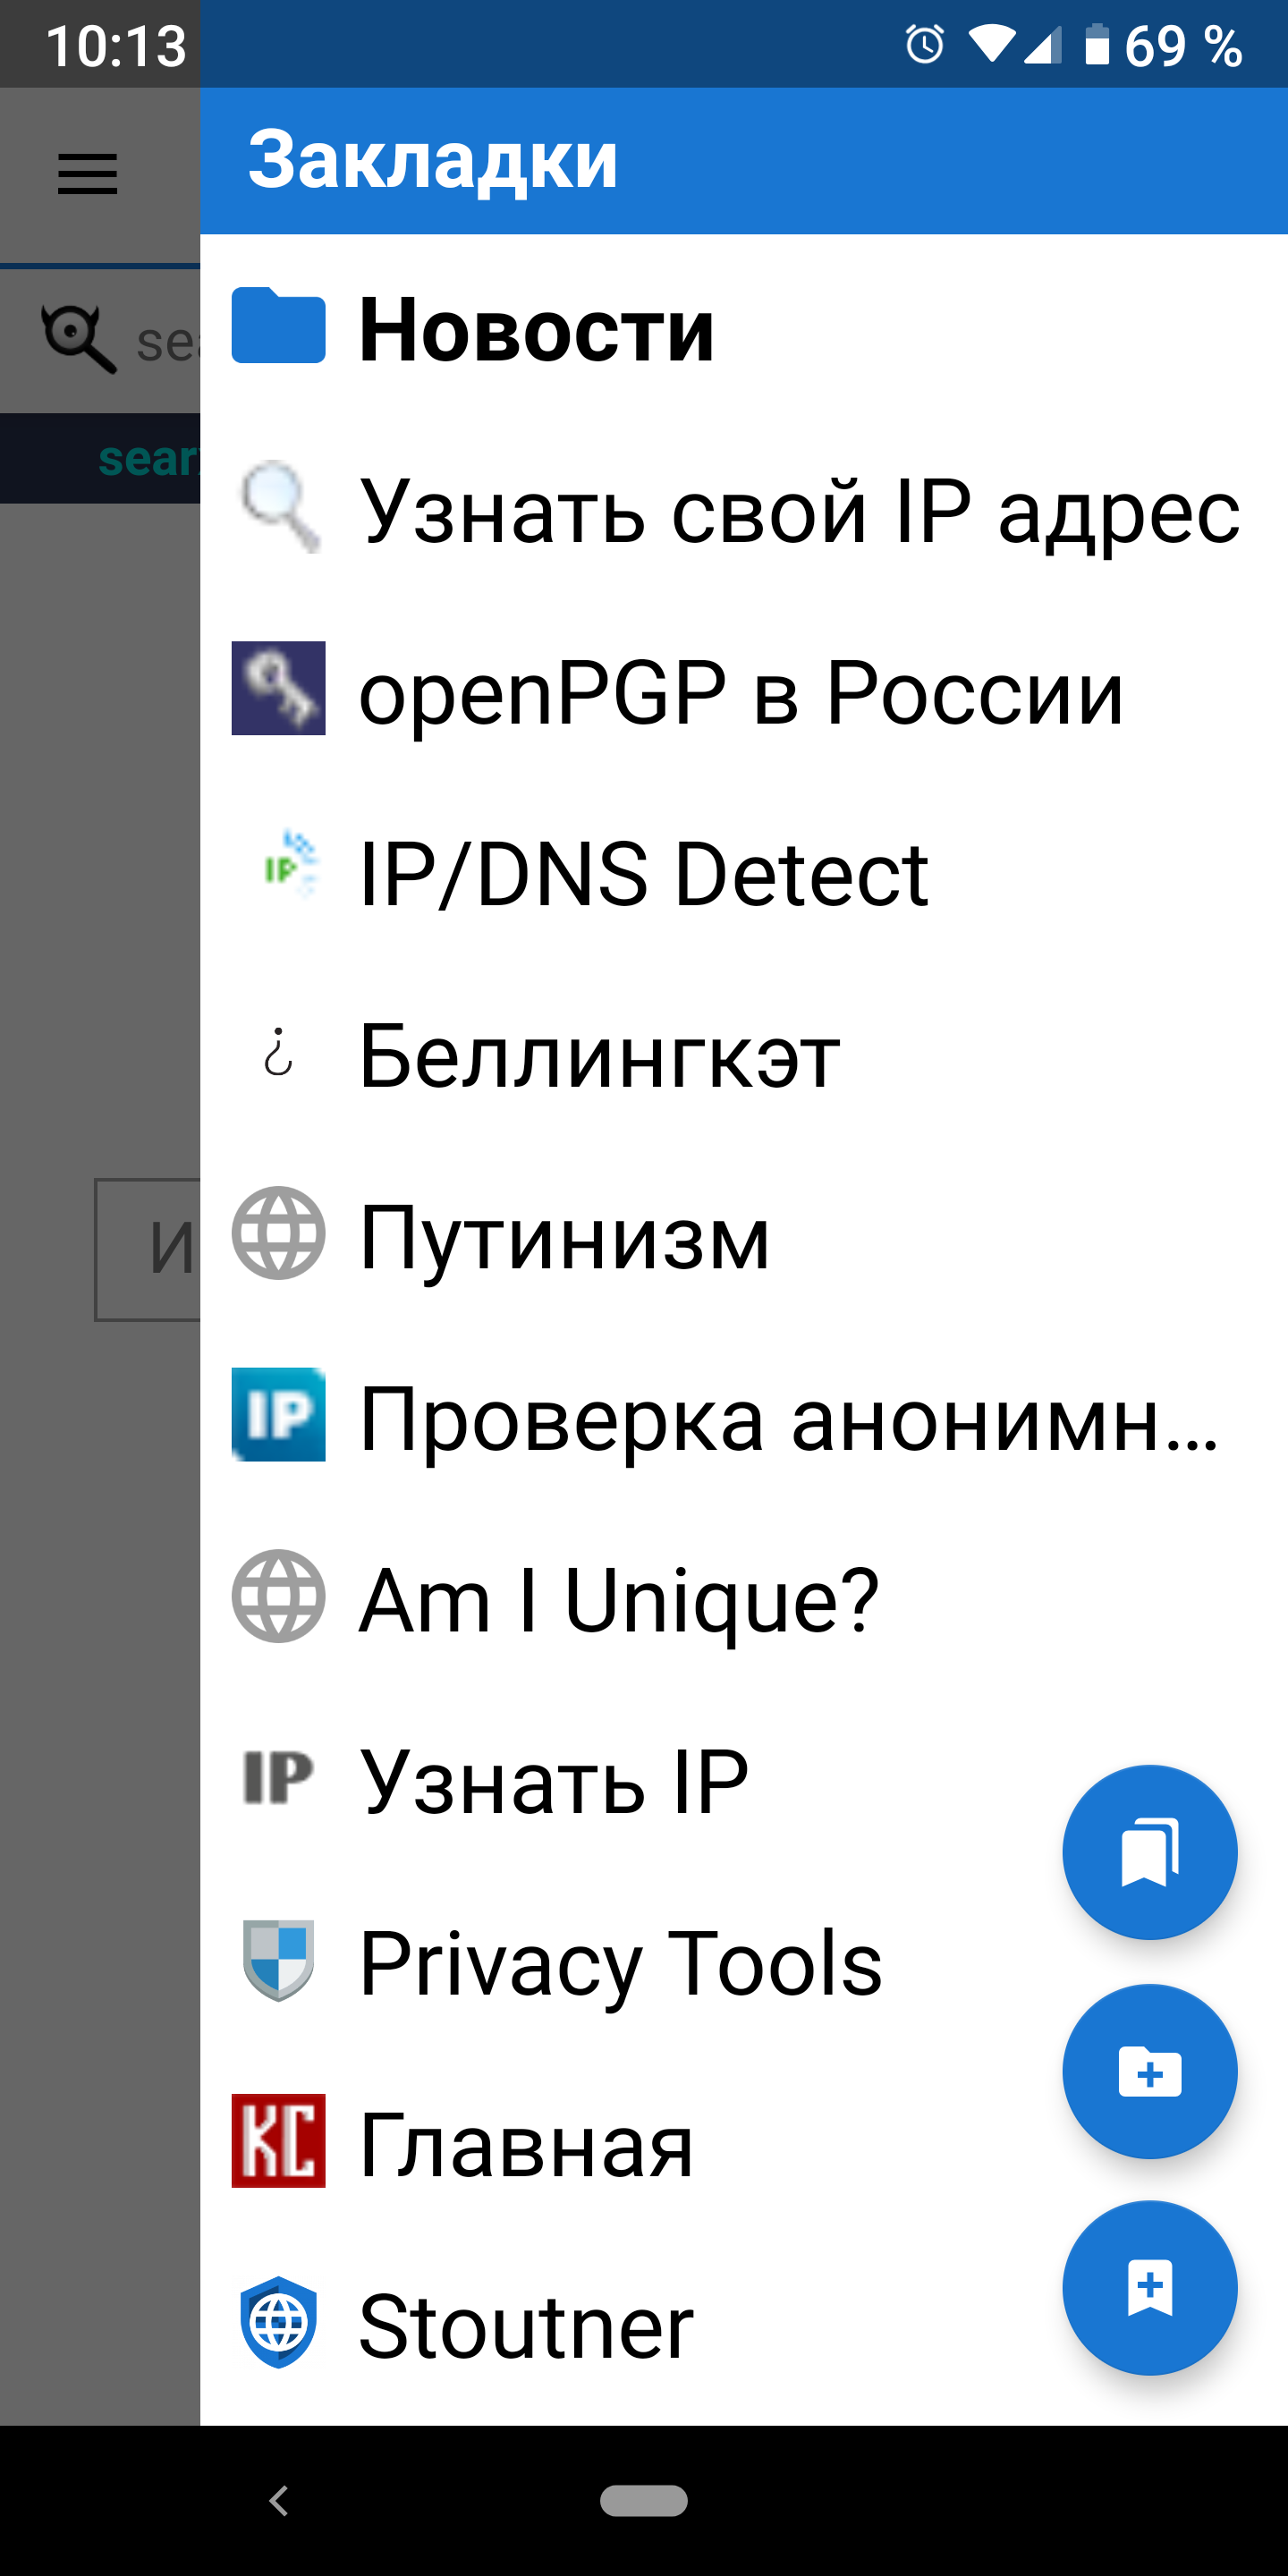 fastlane/metadata/android/ru-RU/images/phoneScreenshots/04-Bookmarks.png